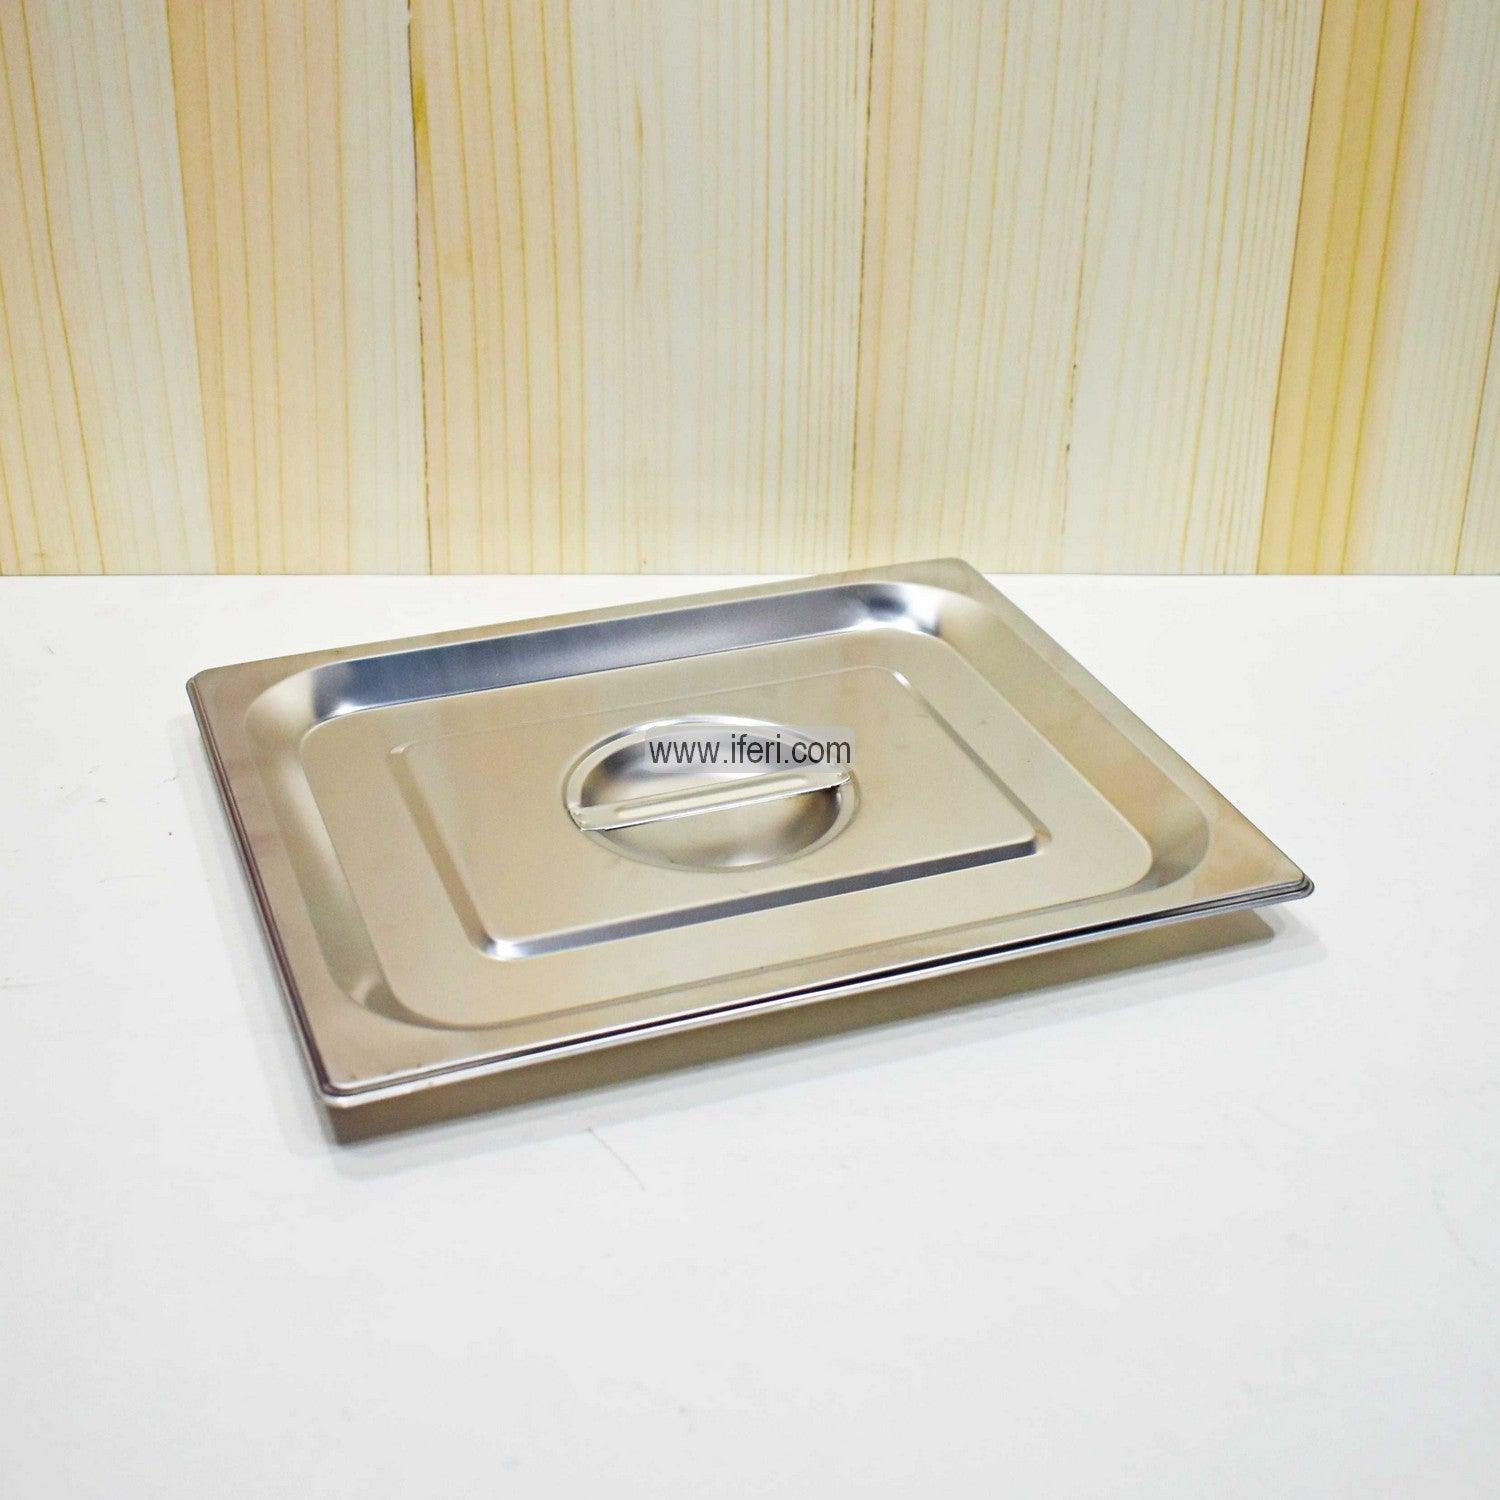 21x13 inch Stainless Steel Food Pan Lid SN0617-5 Price in Bangladesh - iferi.com